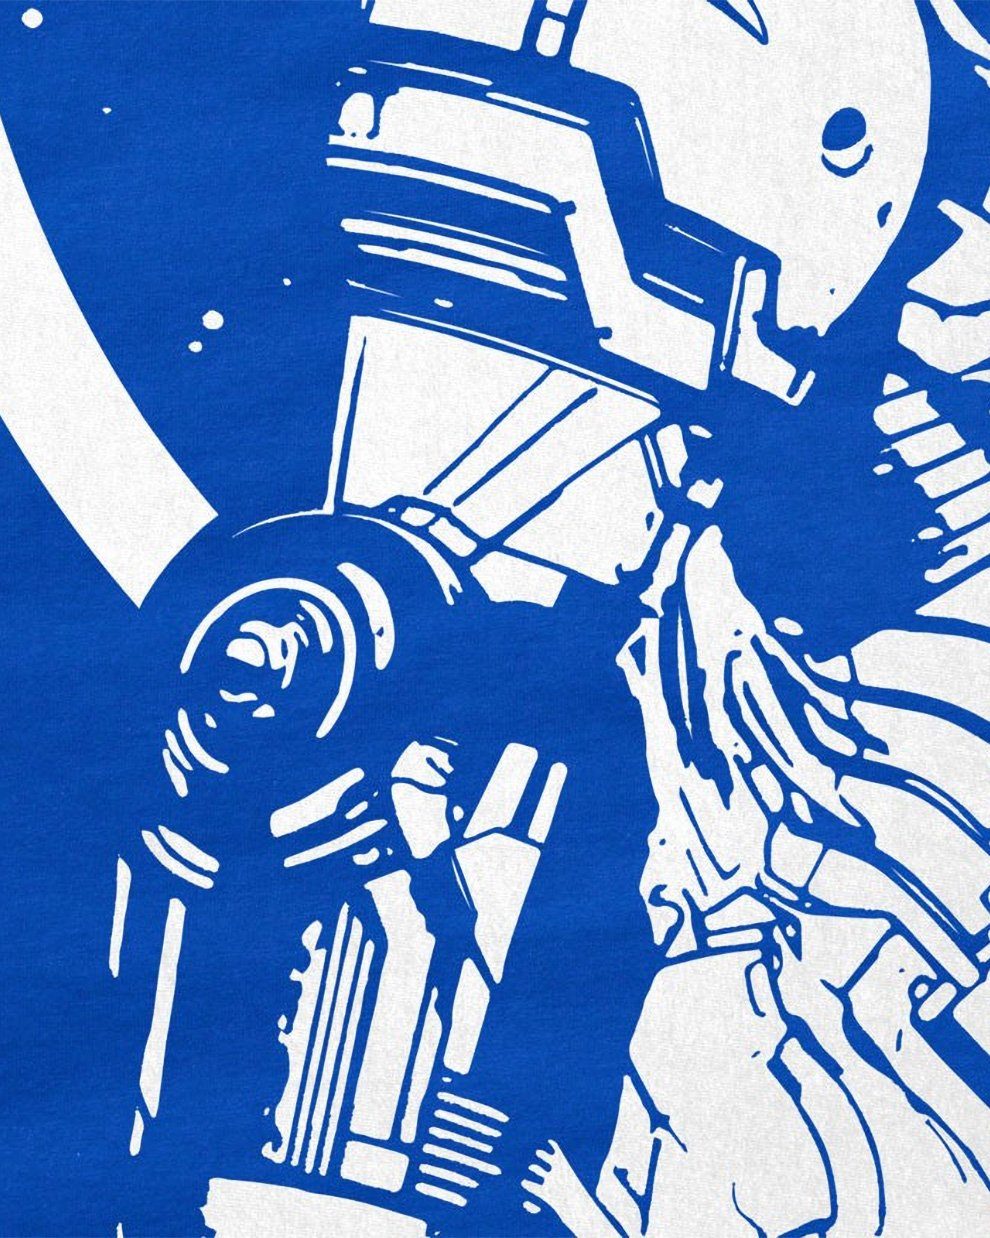 blau gamer Print-Shirt Return Samus geek T-Shirt metroid nes Herren nerd style3 snes